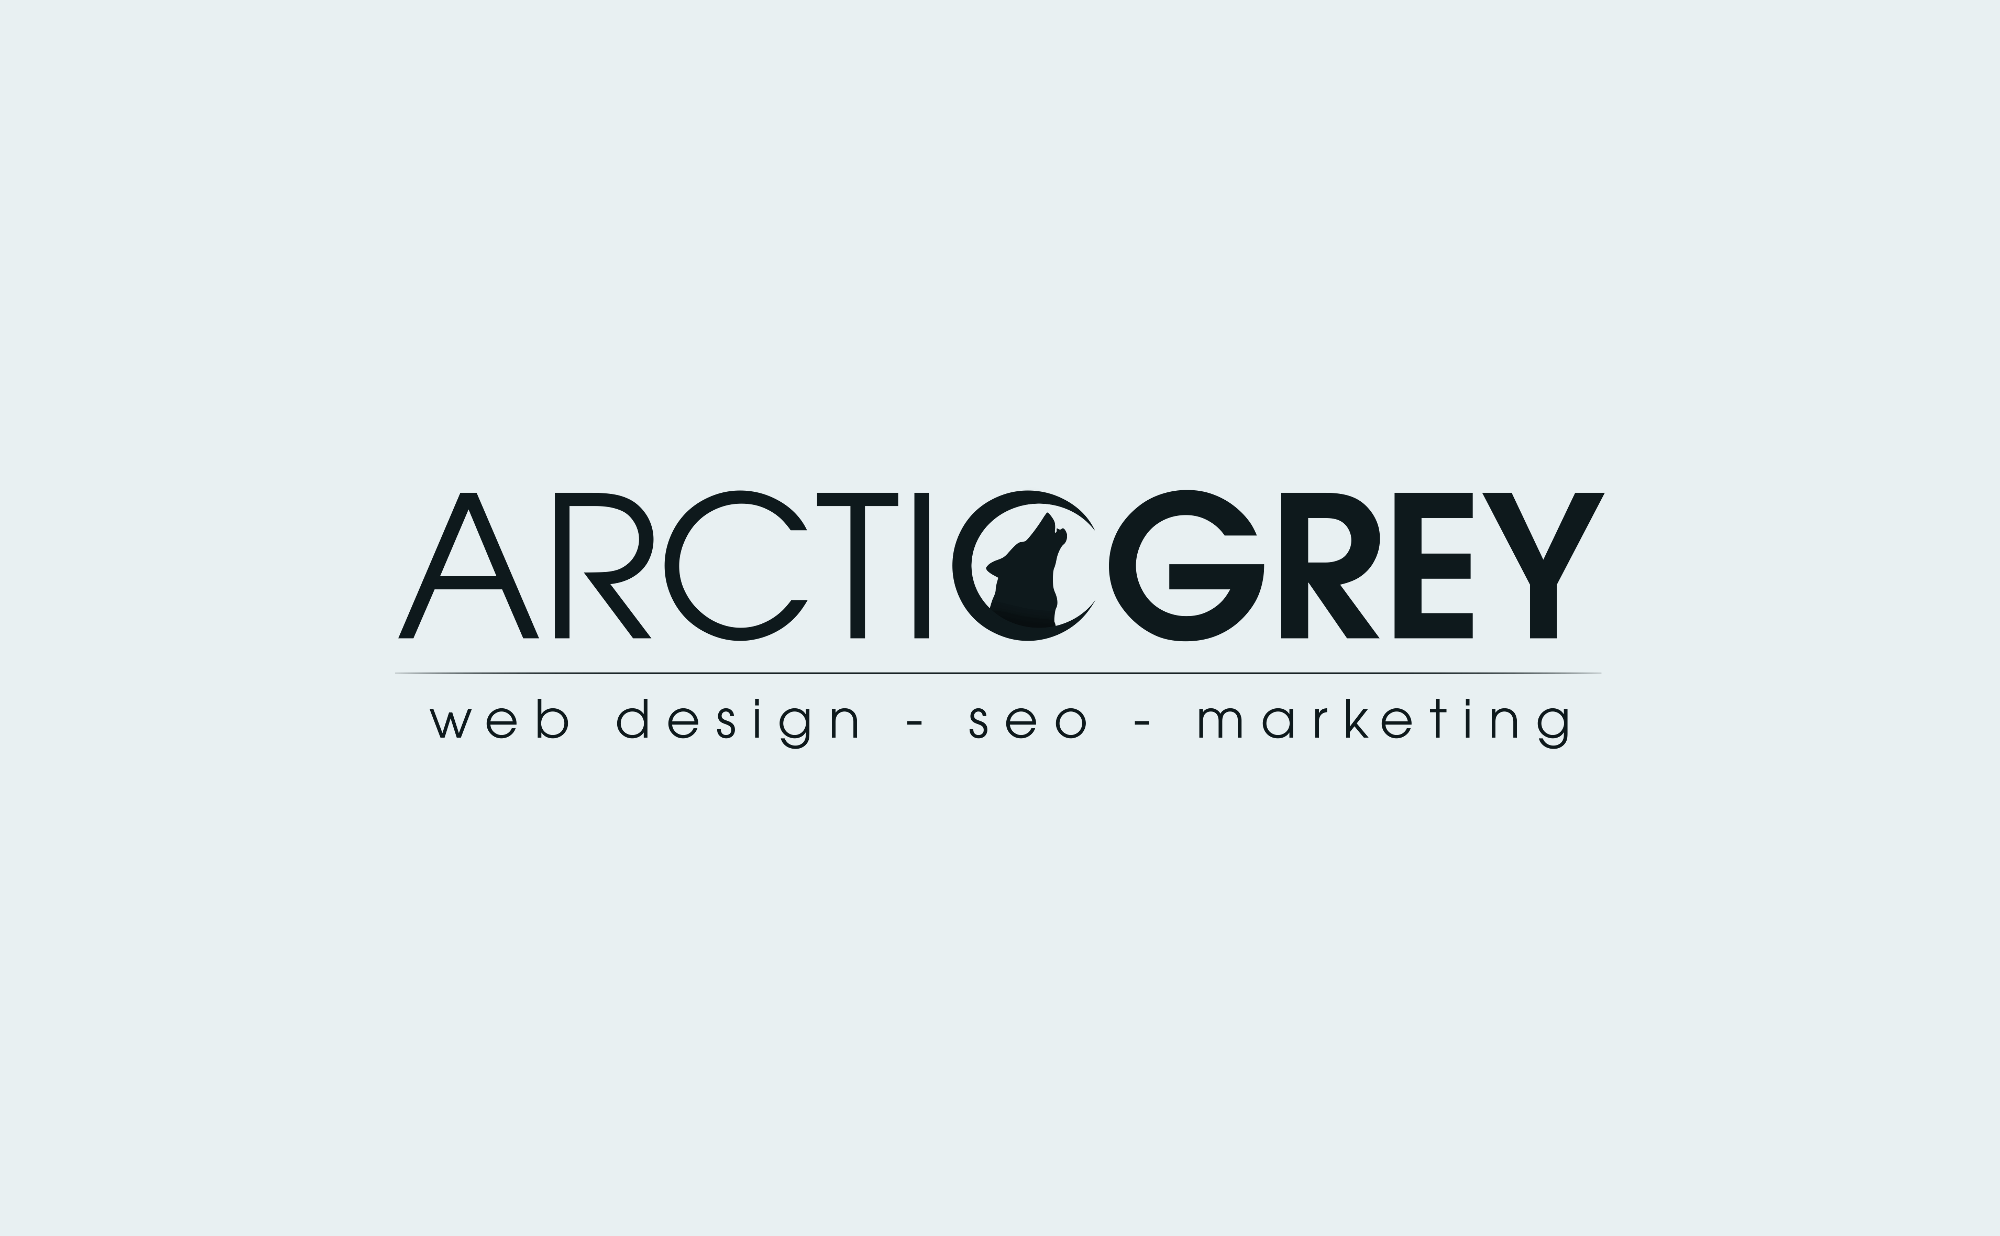 Best Shopify Design Agency Logo: Arctic Grey Inc